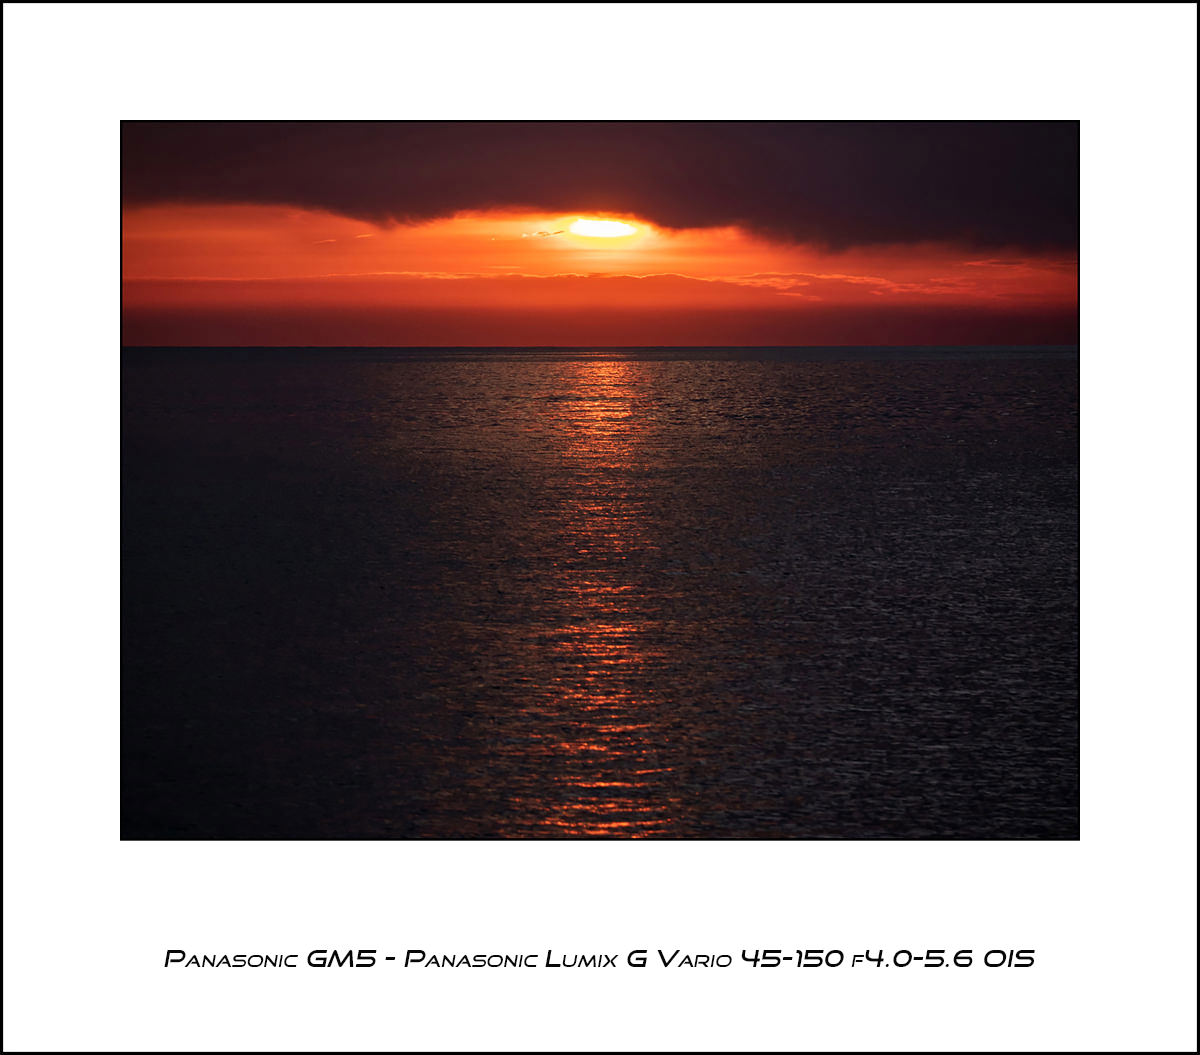 Panasonic GM5 - Panasonic Lumix 45-150 f4.0-5.6